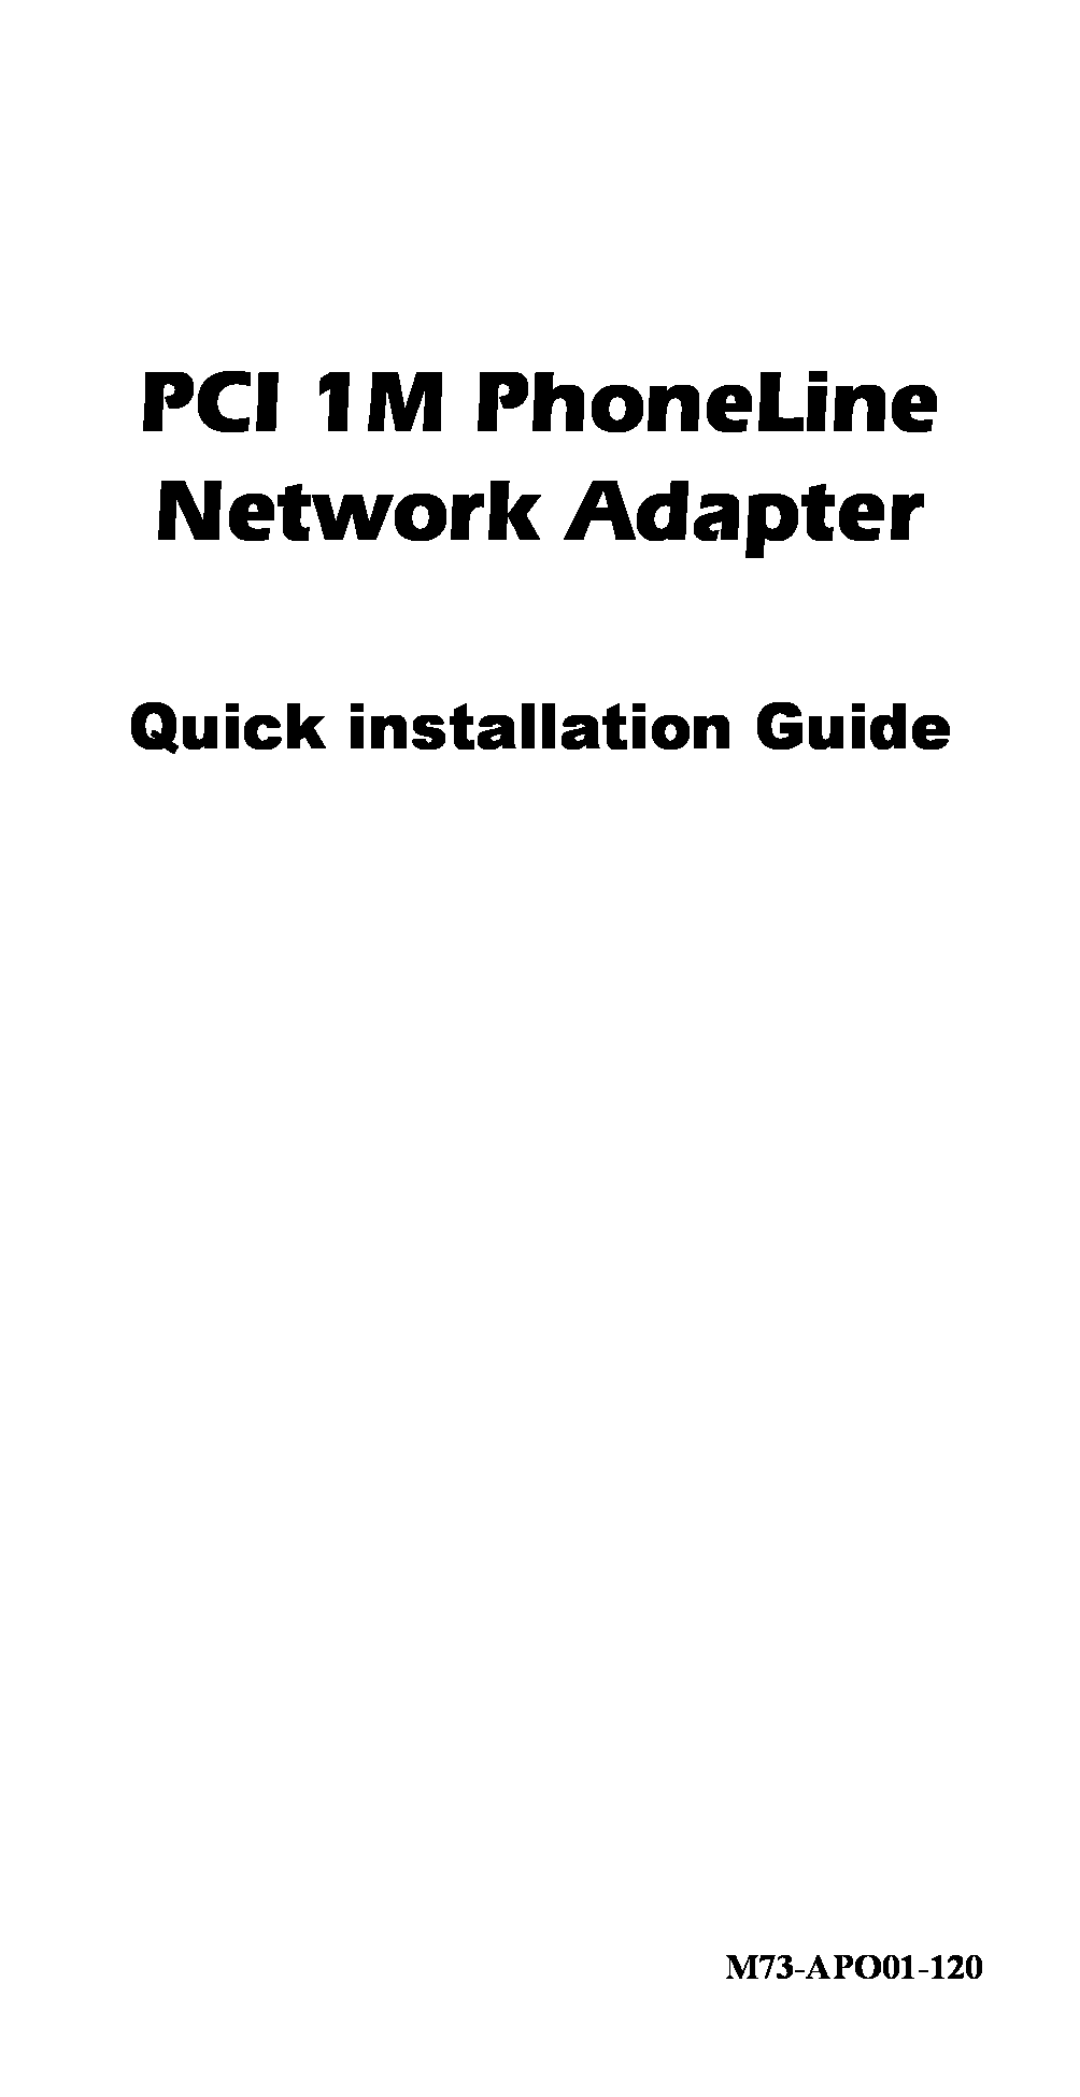 Abocom HP1000 manual PCI 1M PhoneLine Network Adapter, Quick installation Guide, M73-APO01-120 